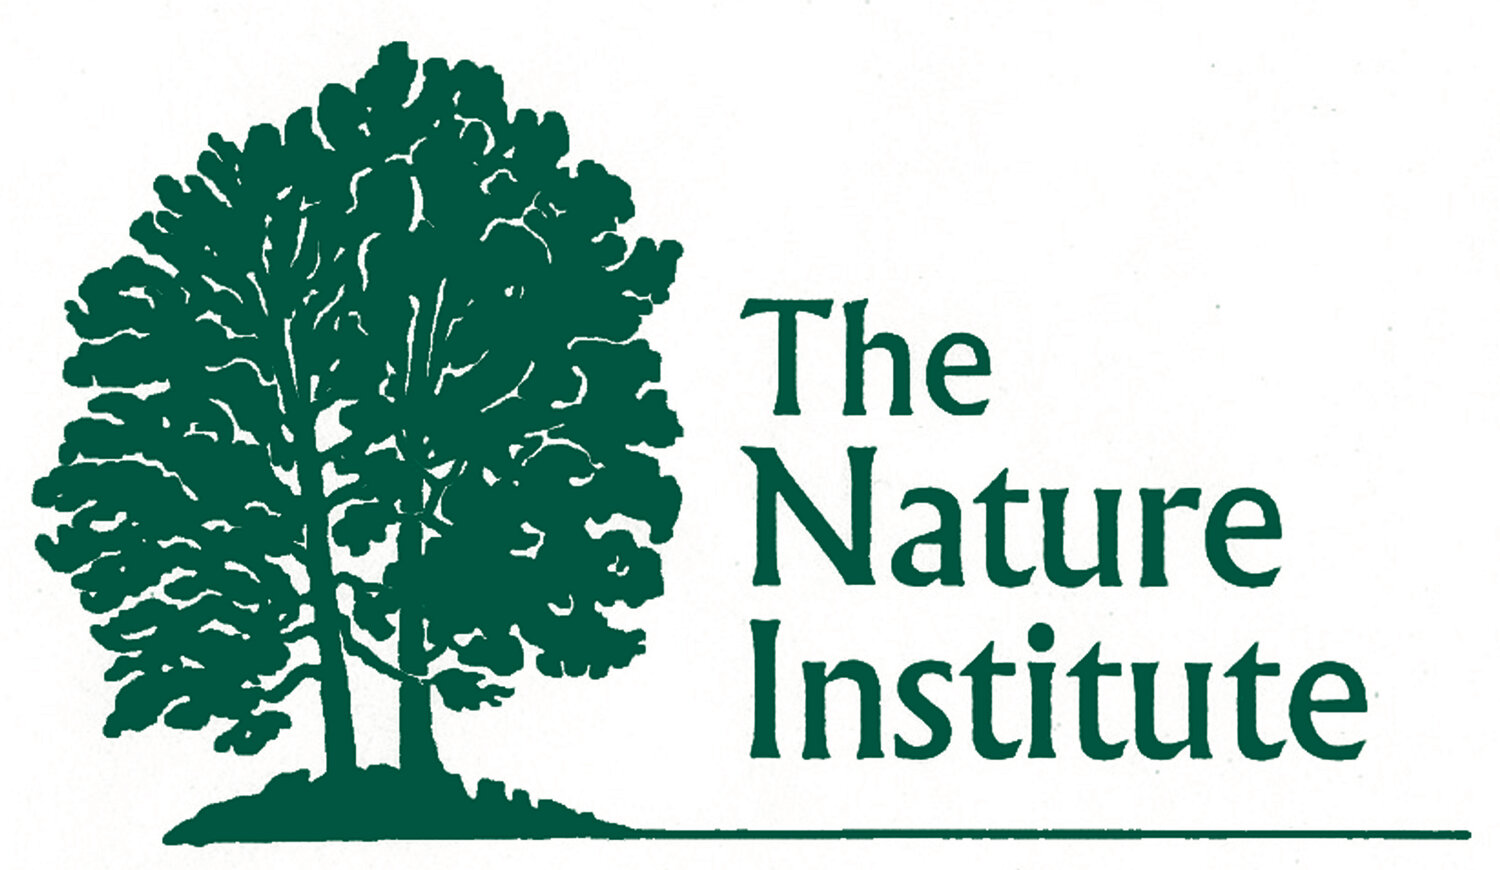 www.natureinstitute.org